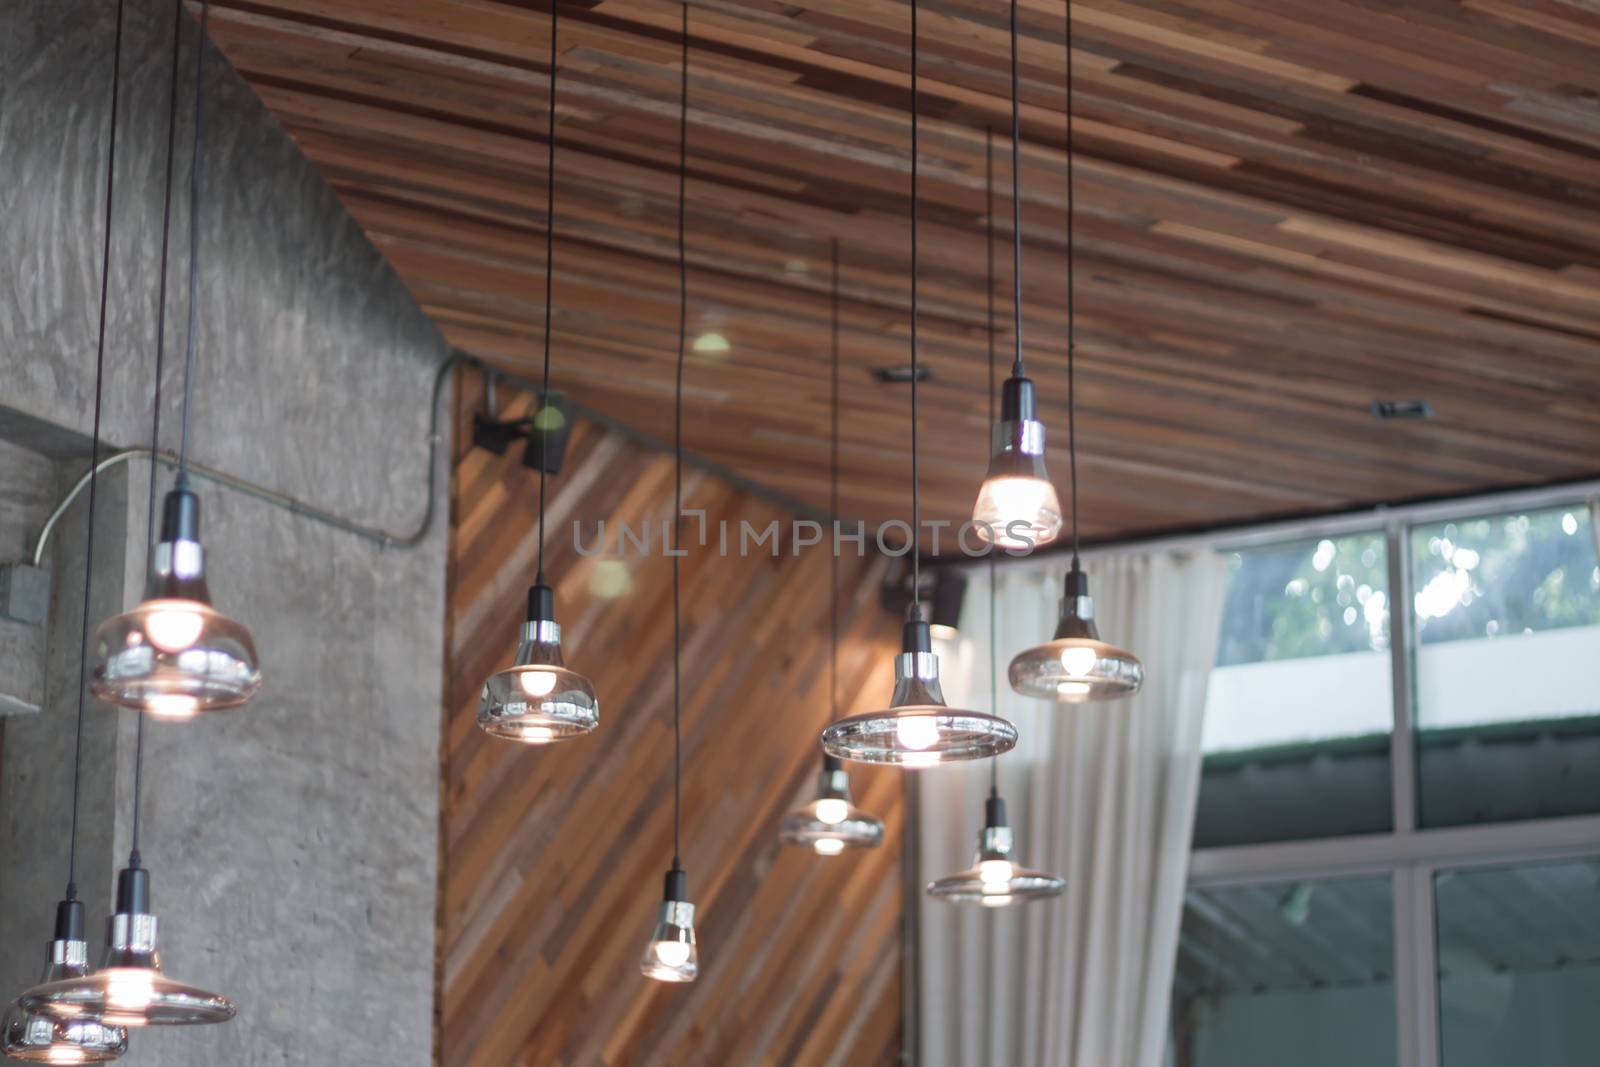 Decorative light bulbs in modern style, stock photo